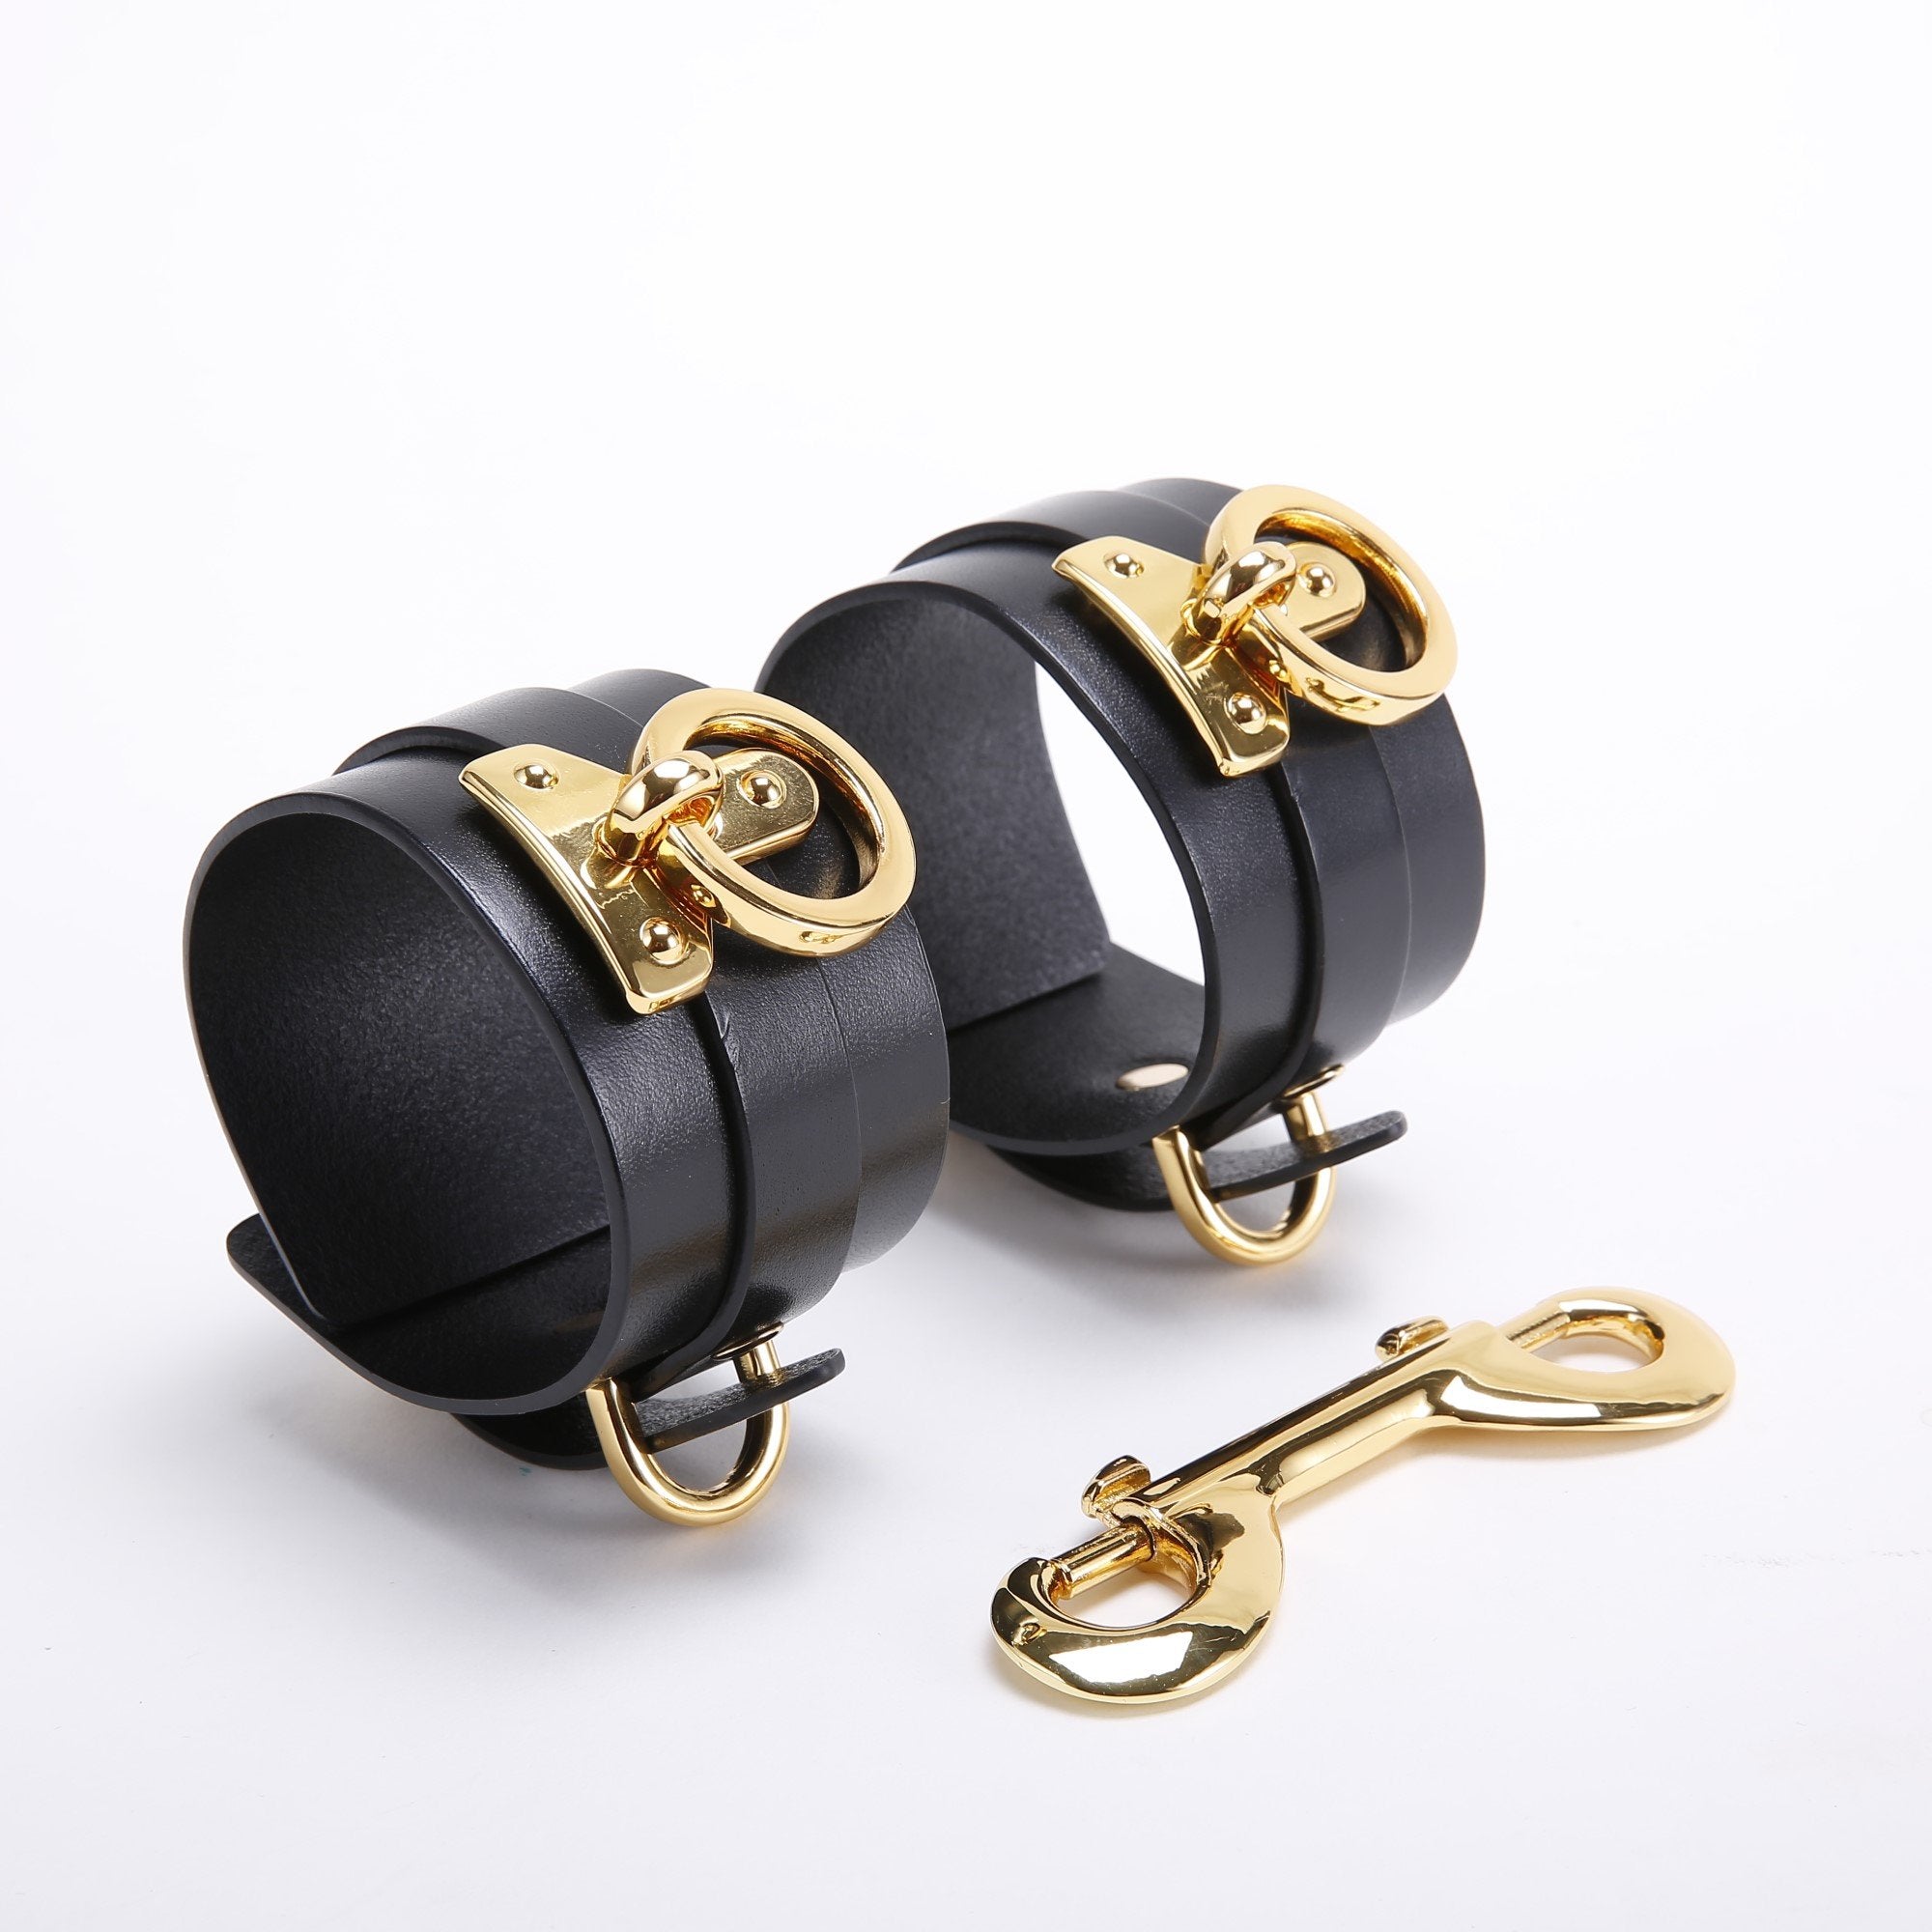 Luxury Italian Leather Handcuffs by UPKO